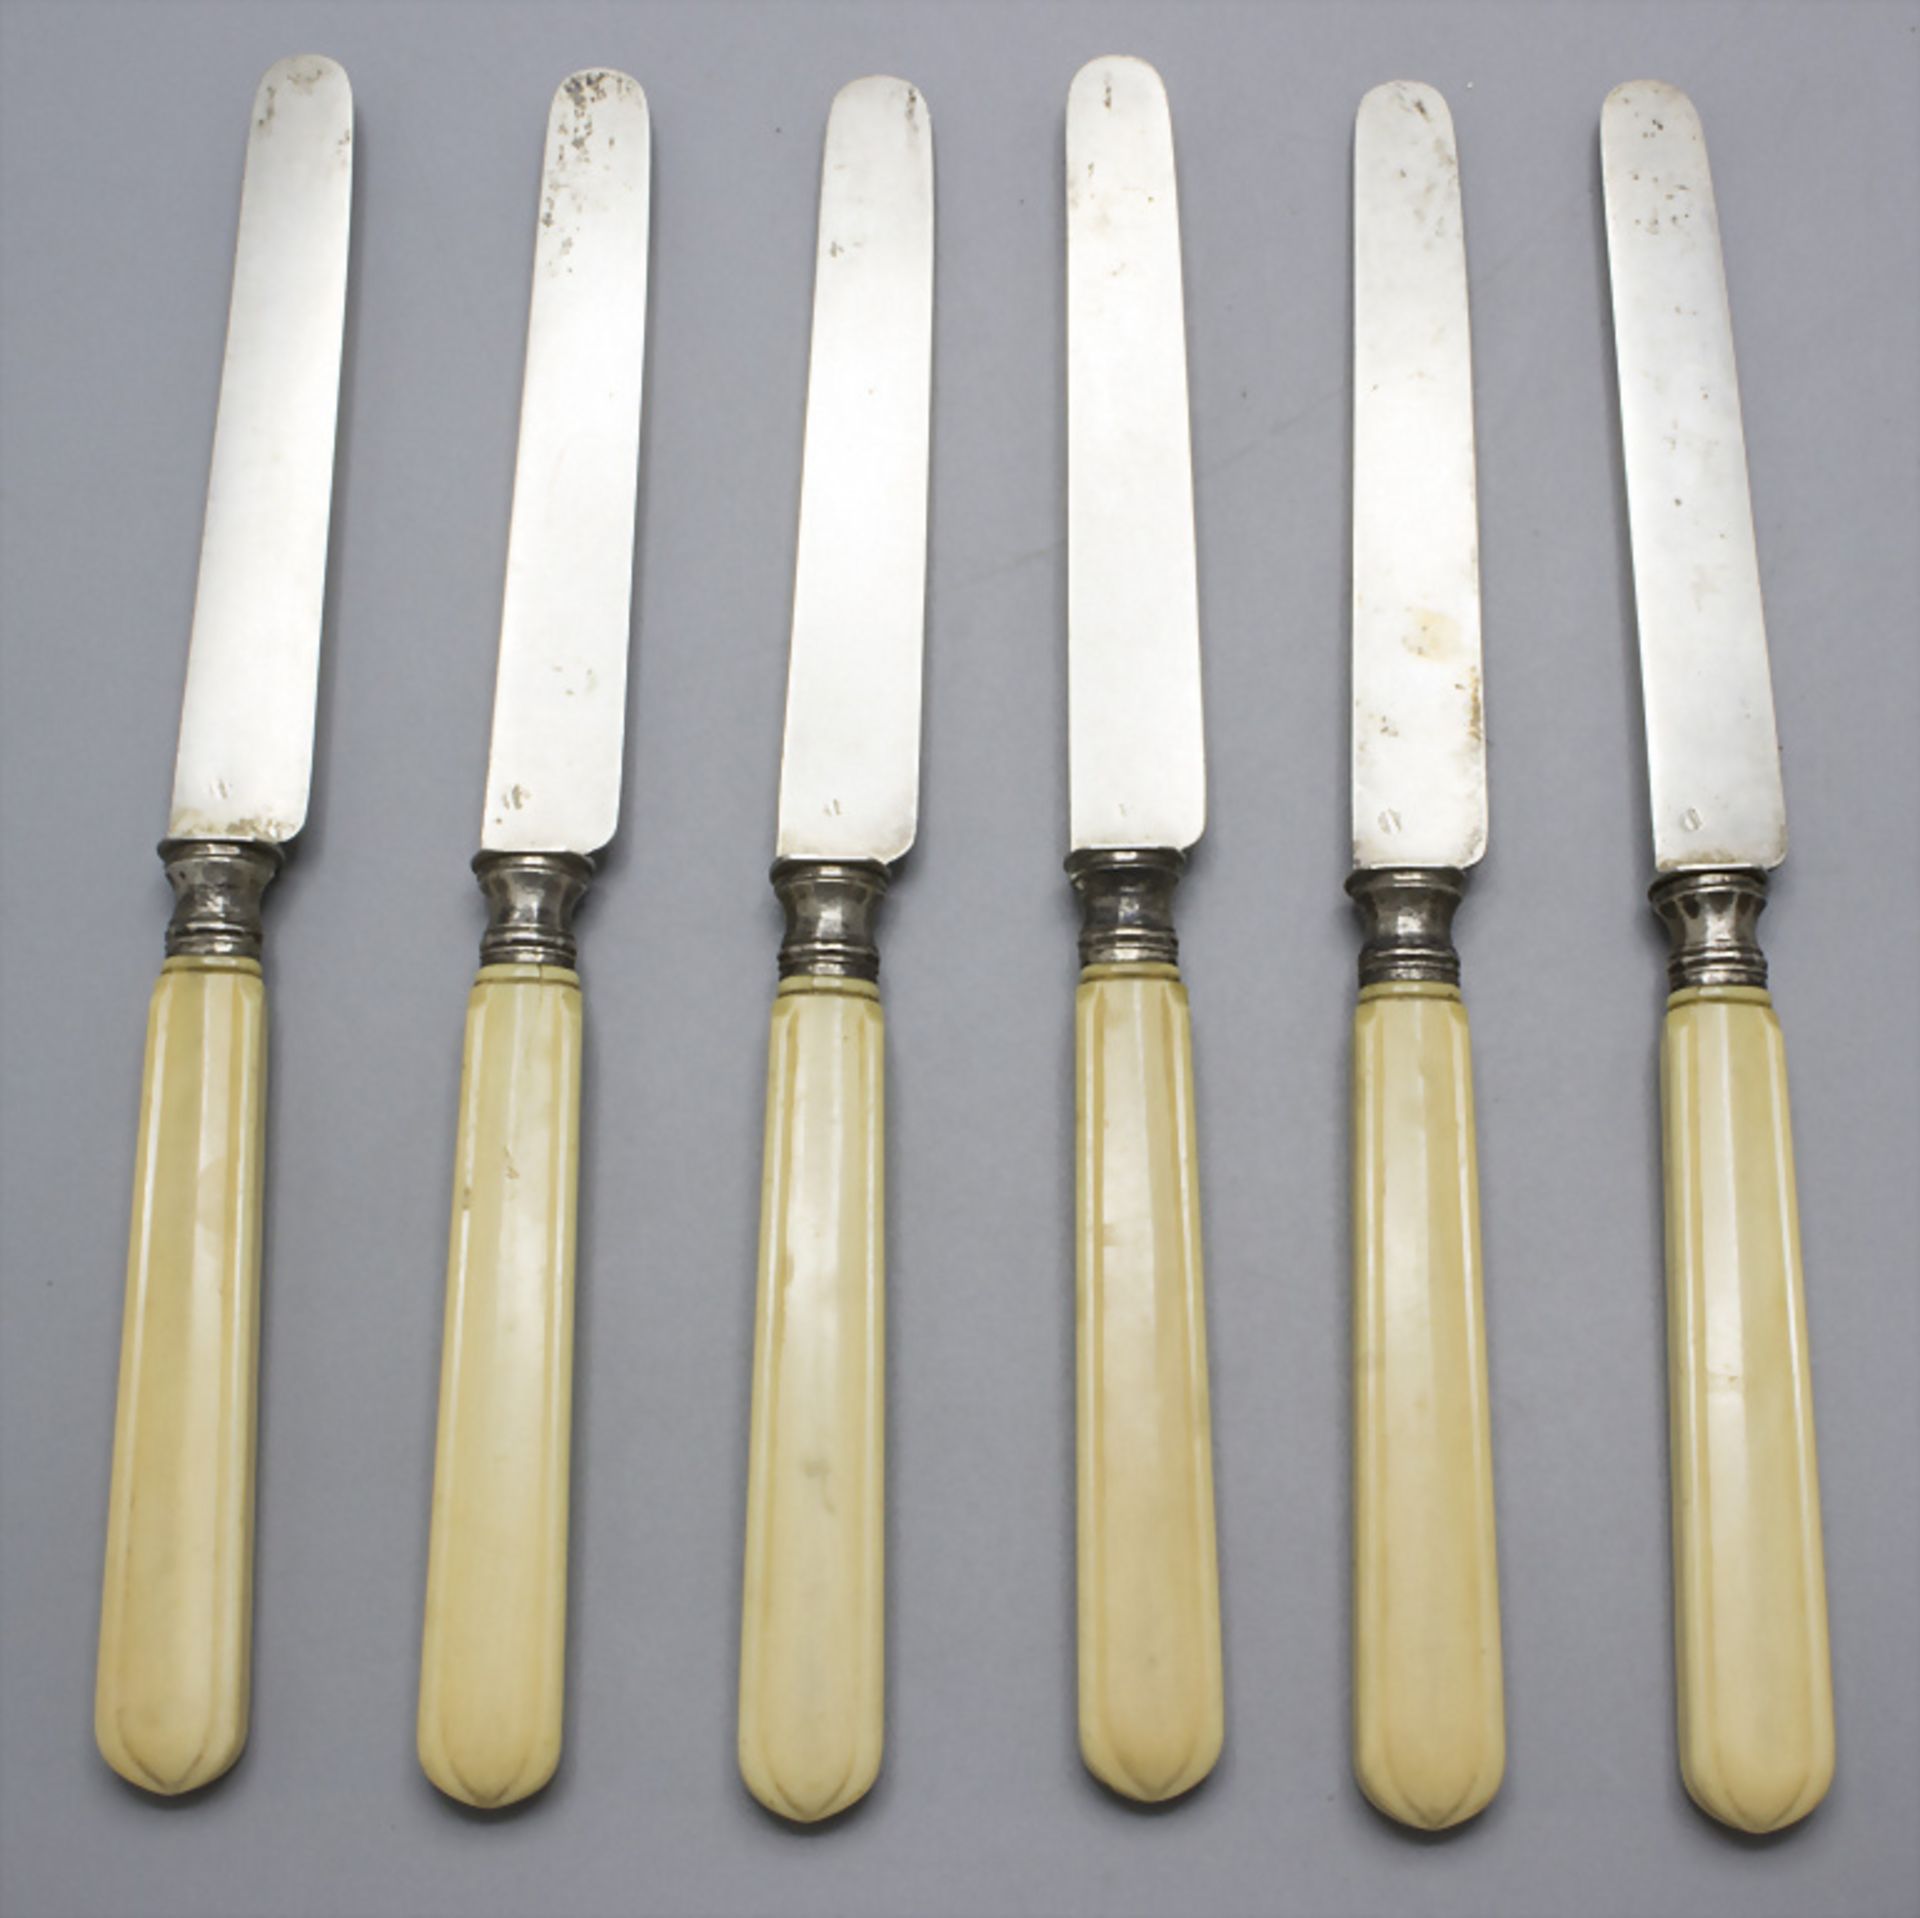 6 Obst-/Dessertmesser / 6 silver fruit/dessert knives, Louis Bricogne, Paris, Ende 19. Jh. - Bild 2 aus 4